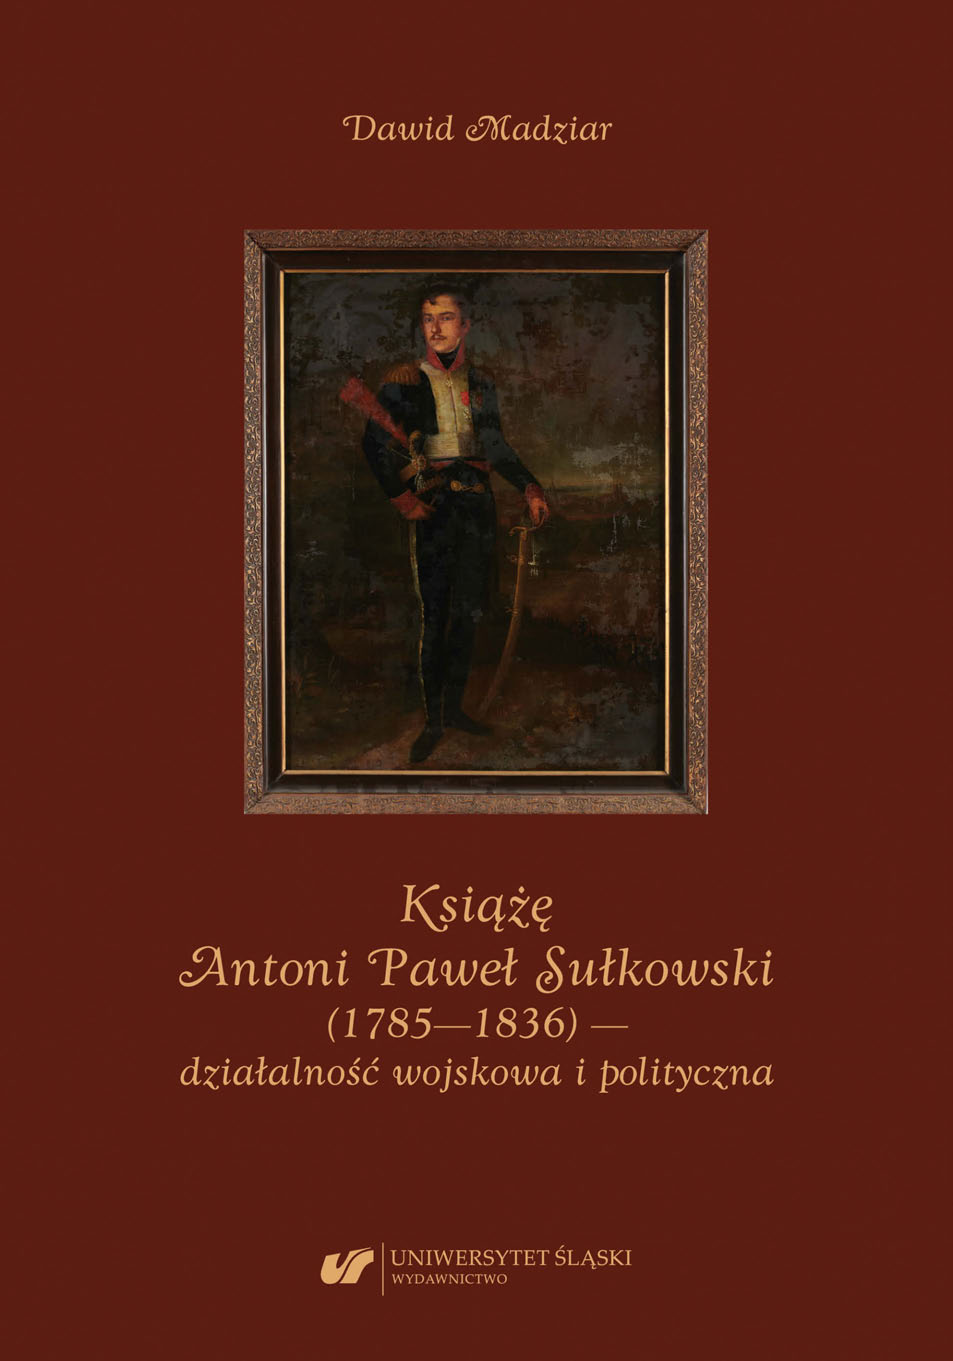 Duke Antoni Paweł Sułkowski (1785—1836) — military and political activity Cover Image